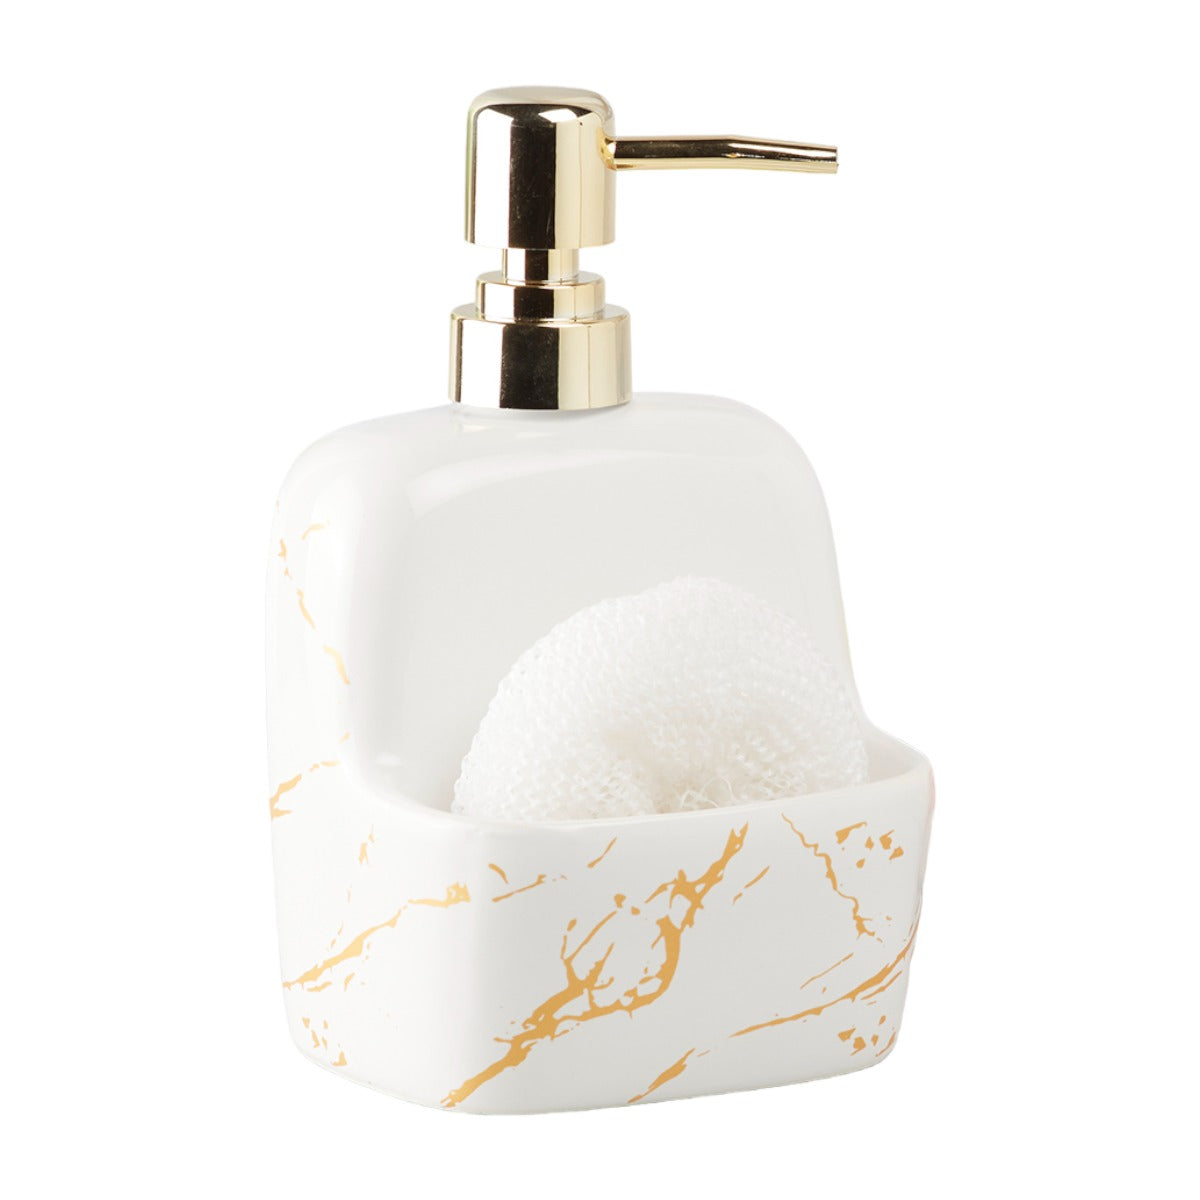 Ceramic Soap Dispenser Pump for Bathroom for Bath Gel, Lotion, Shampoo (10204)